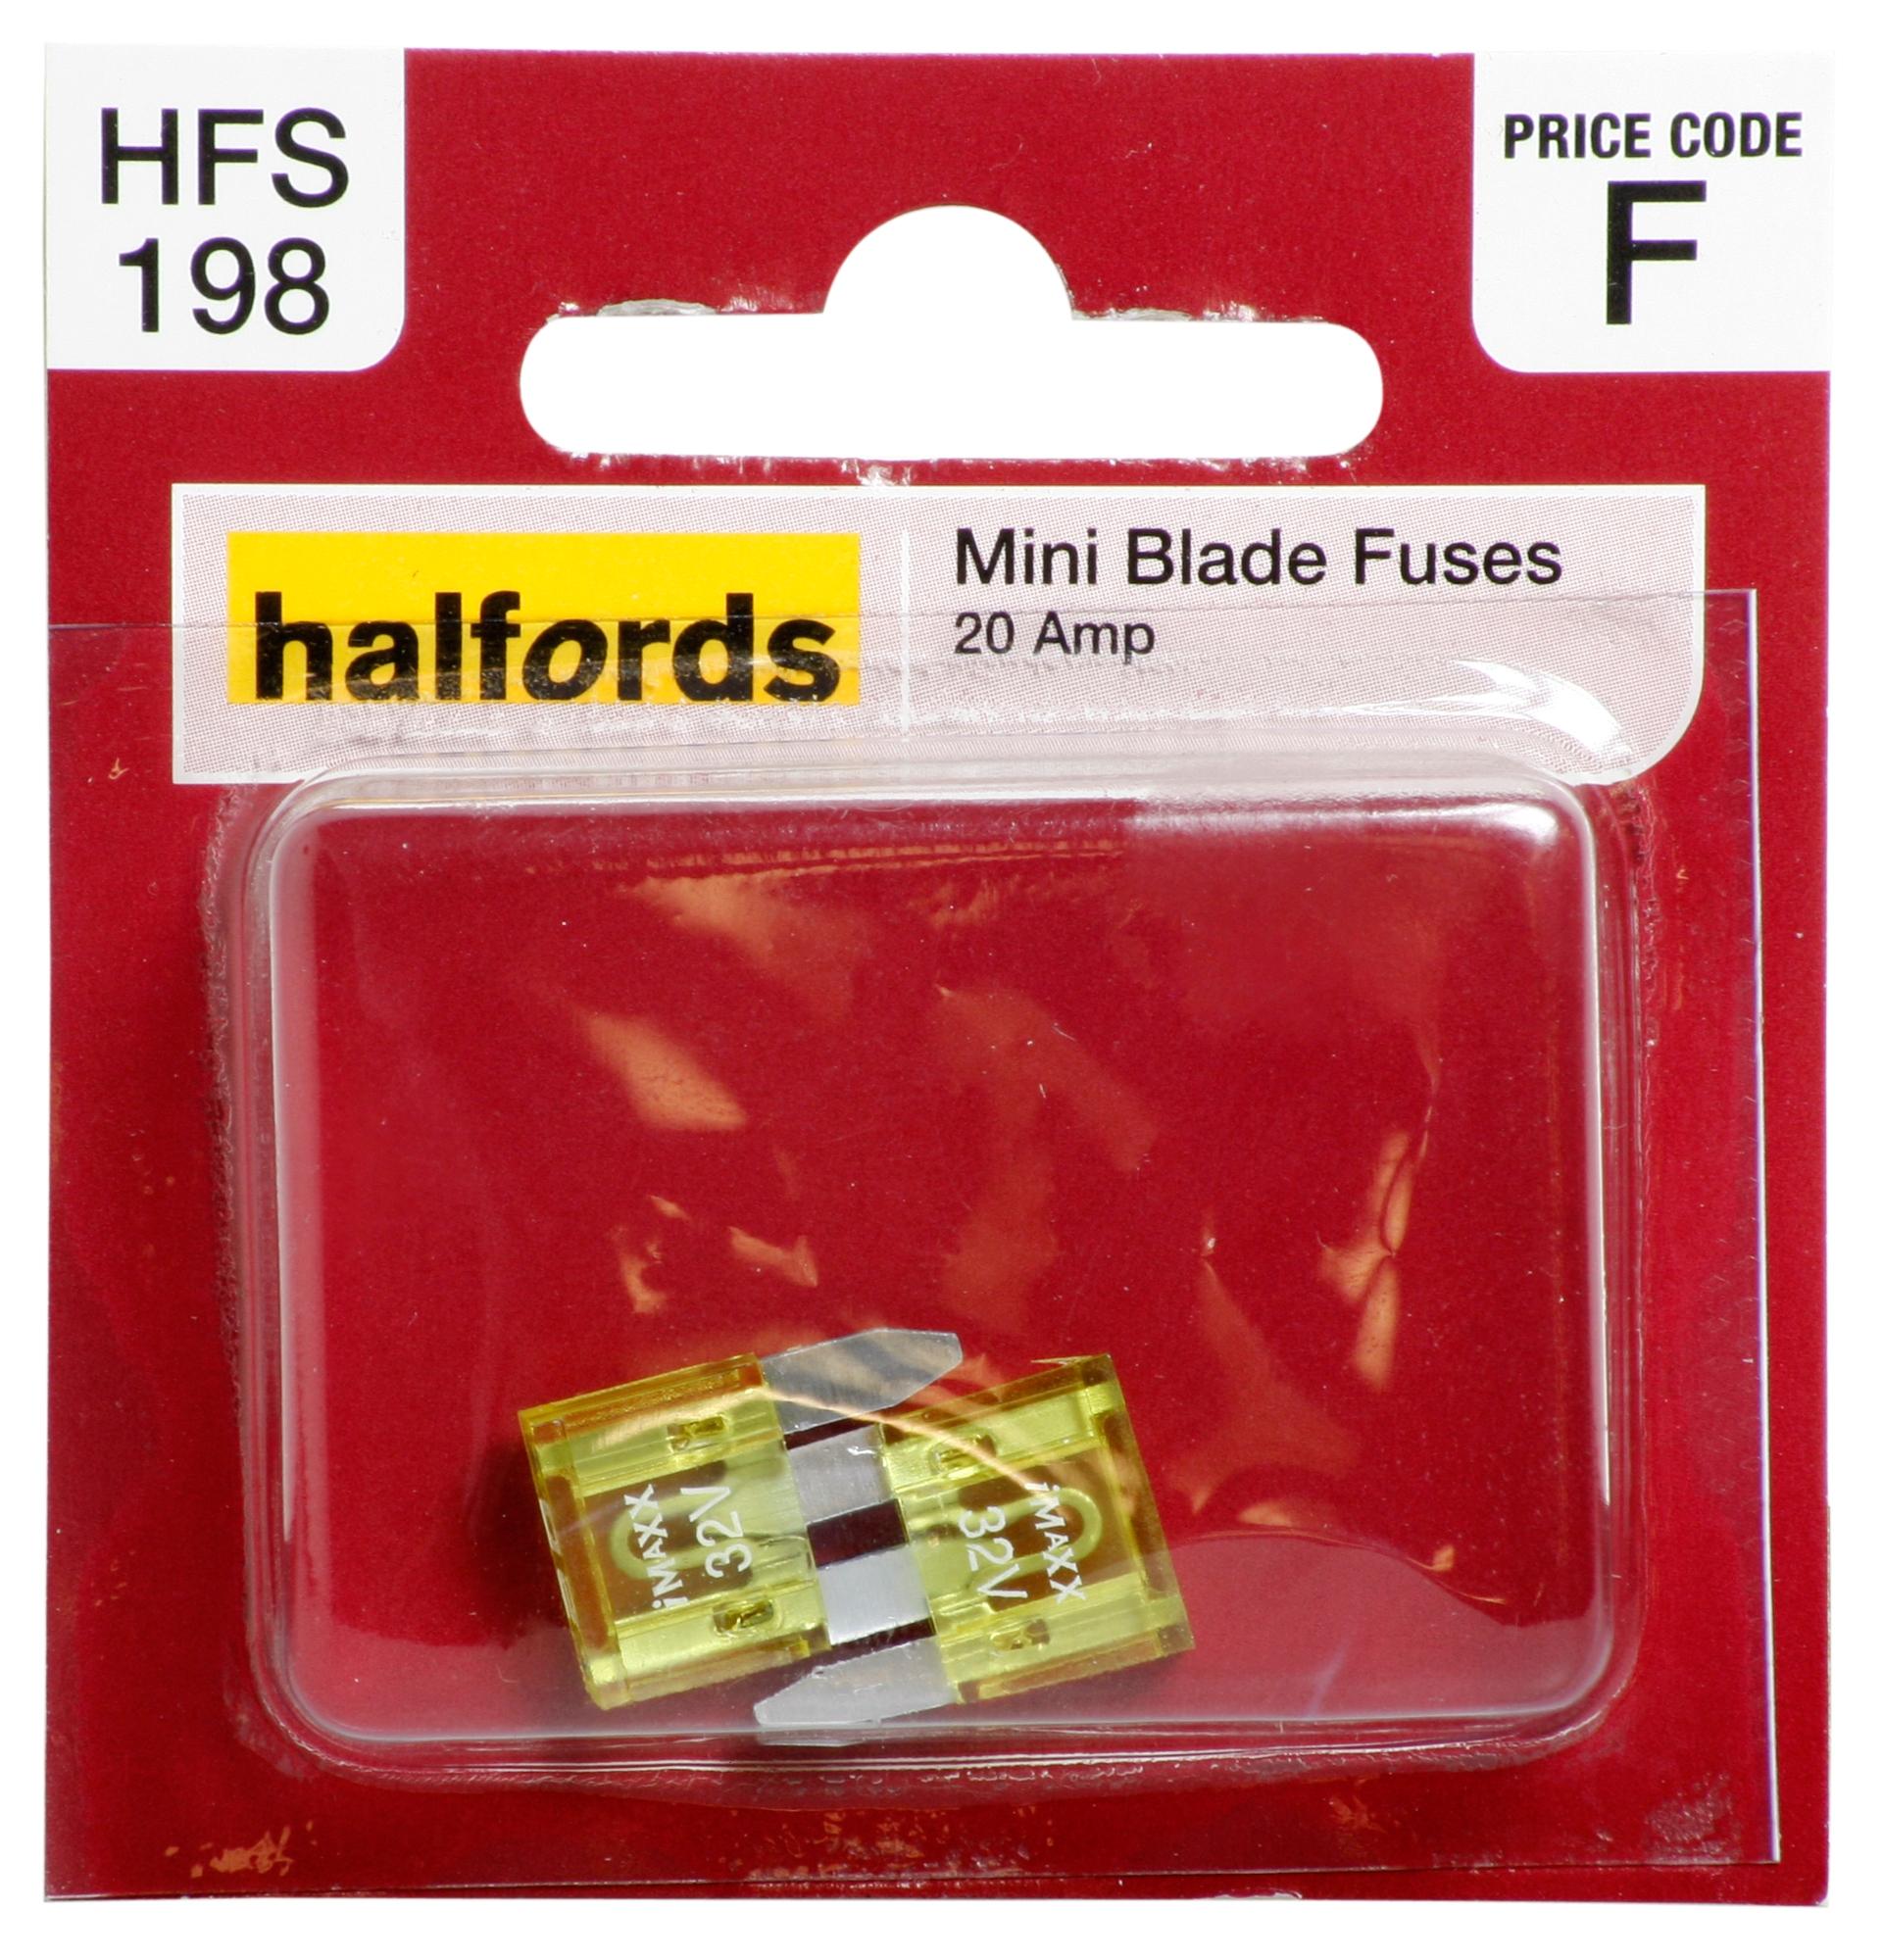 Halfords Mini Blade Fuses 20 Amp (Hfs198)